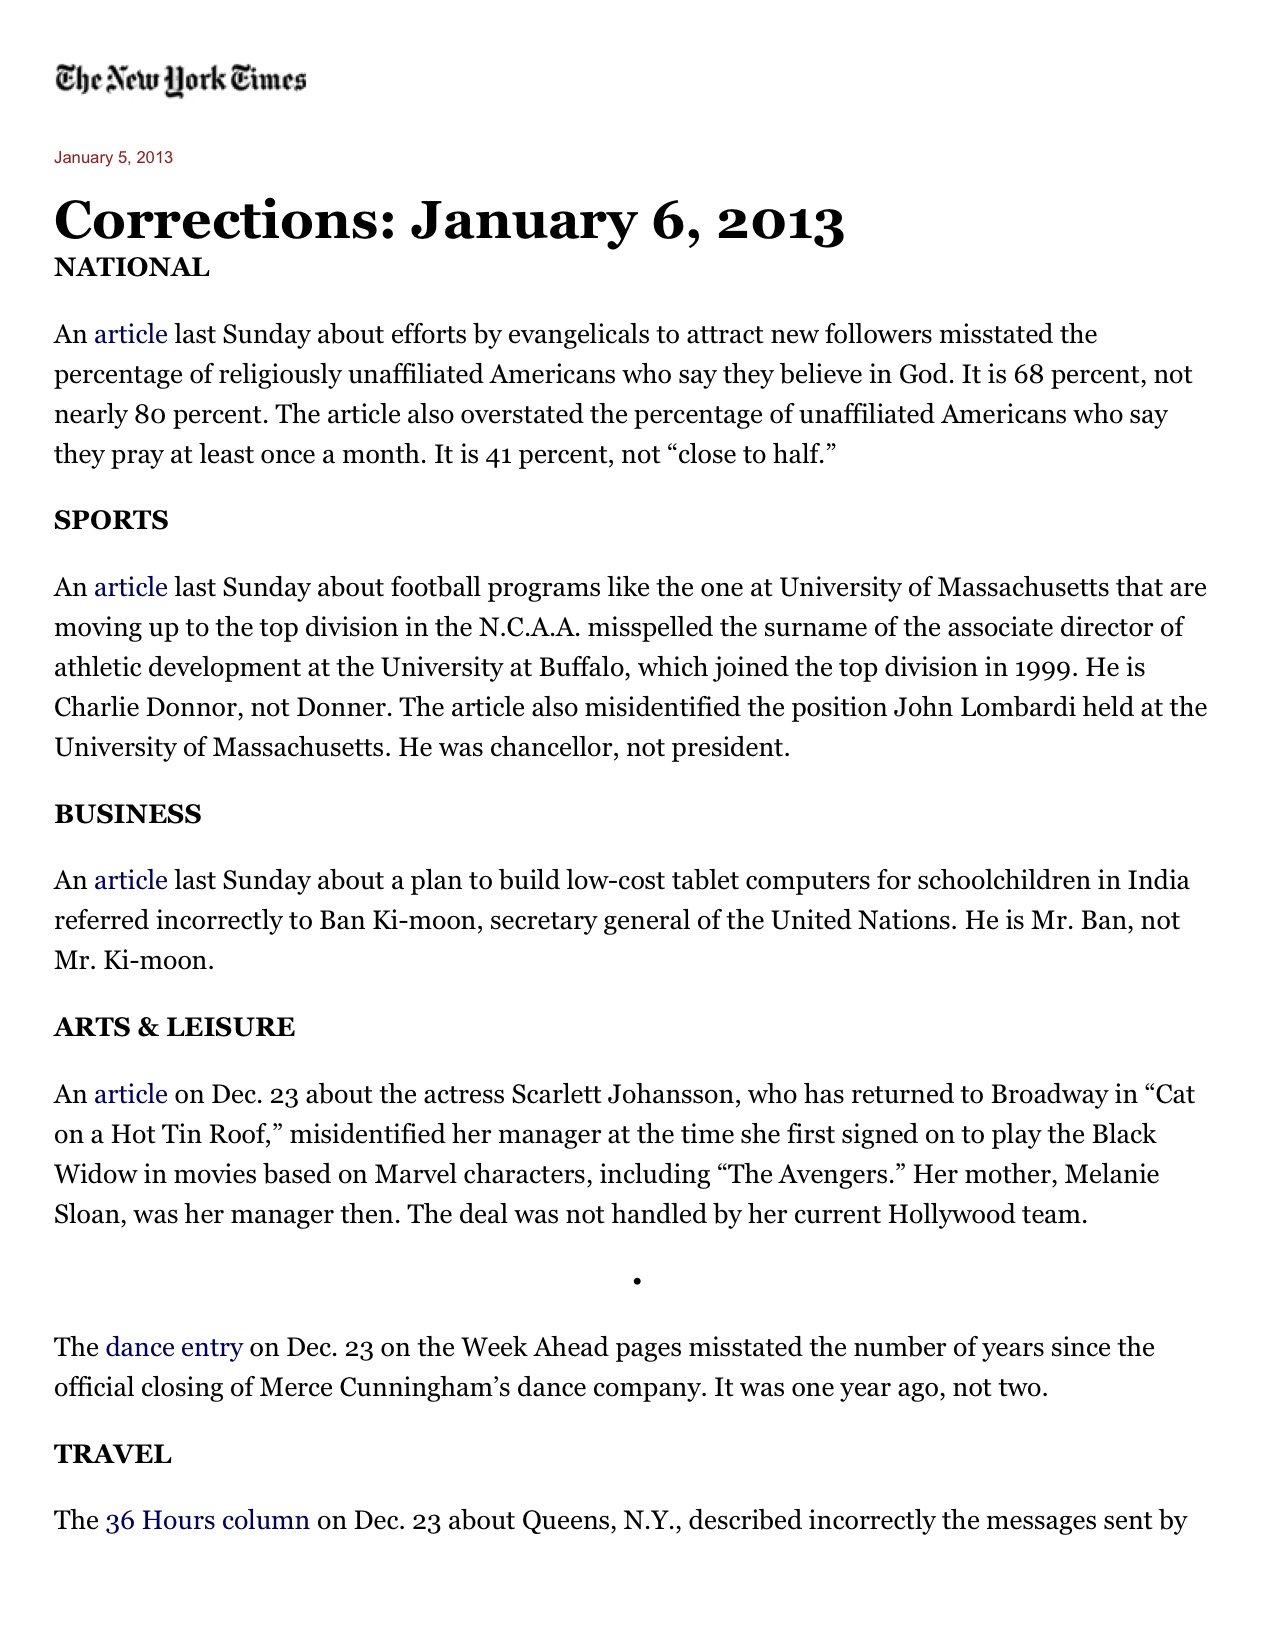 Paper correction website